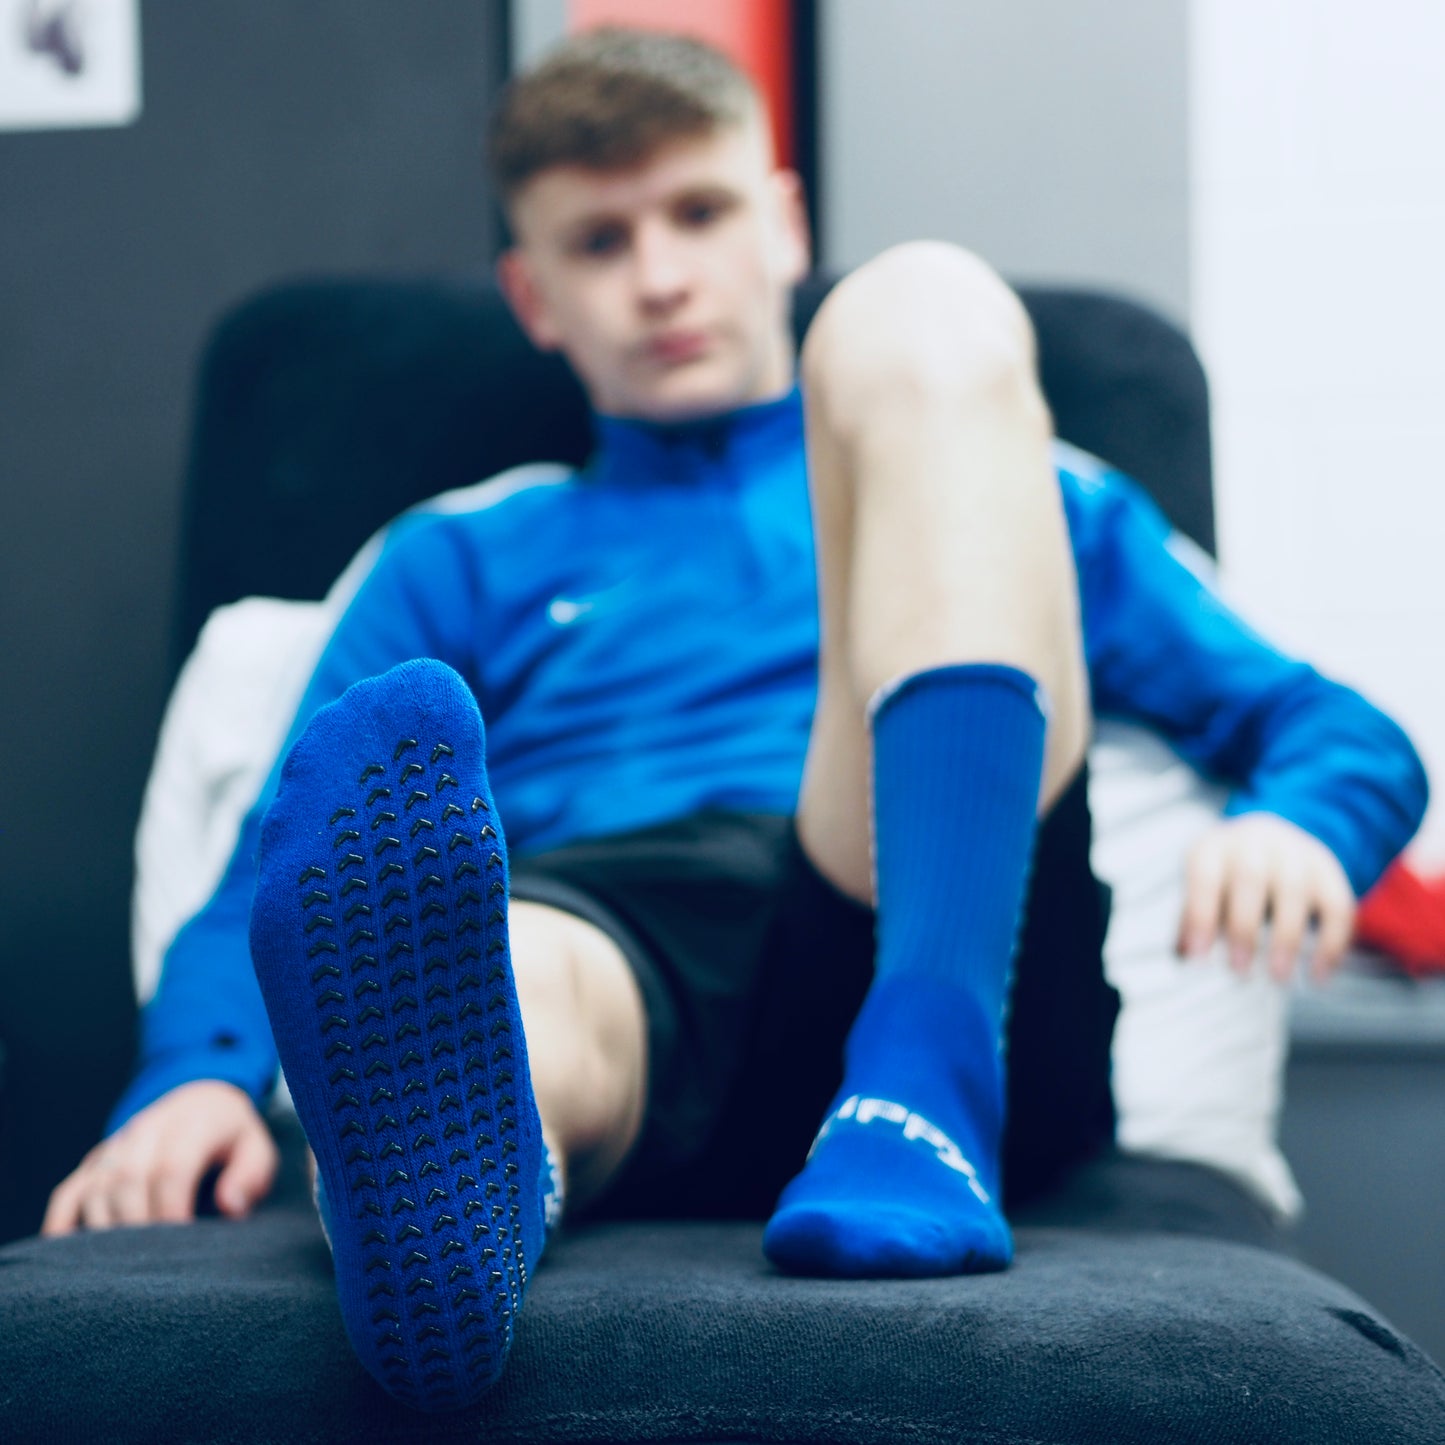 Grippy sports blue football grip socks navy sports socks 